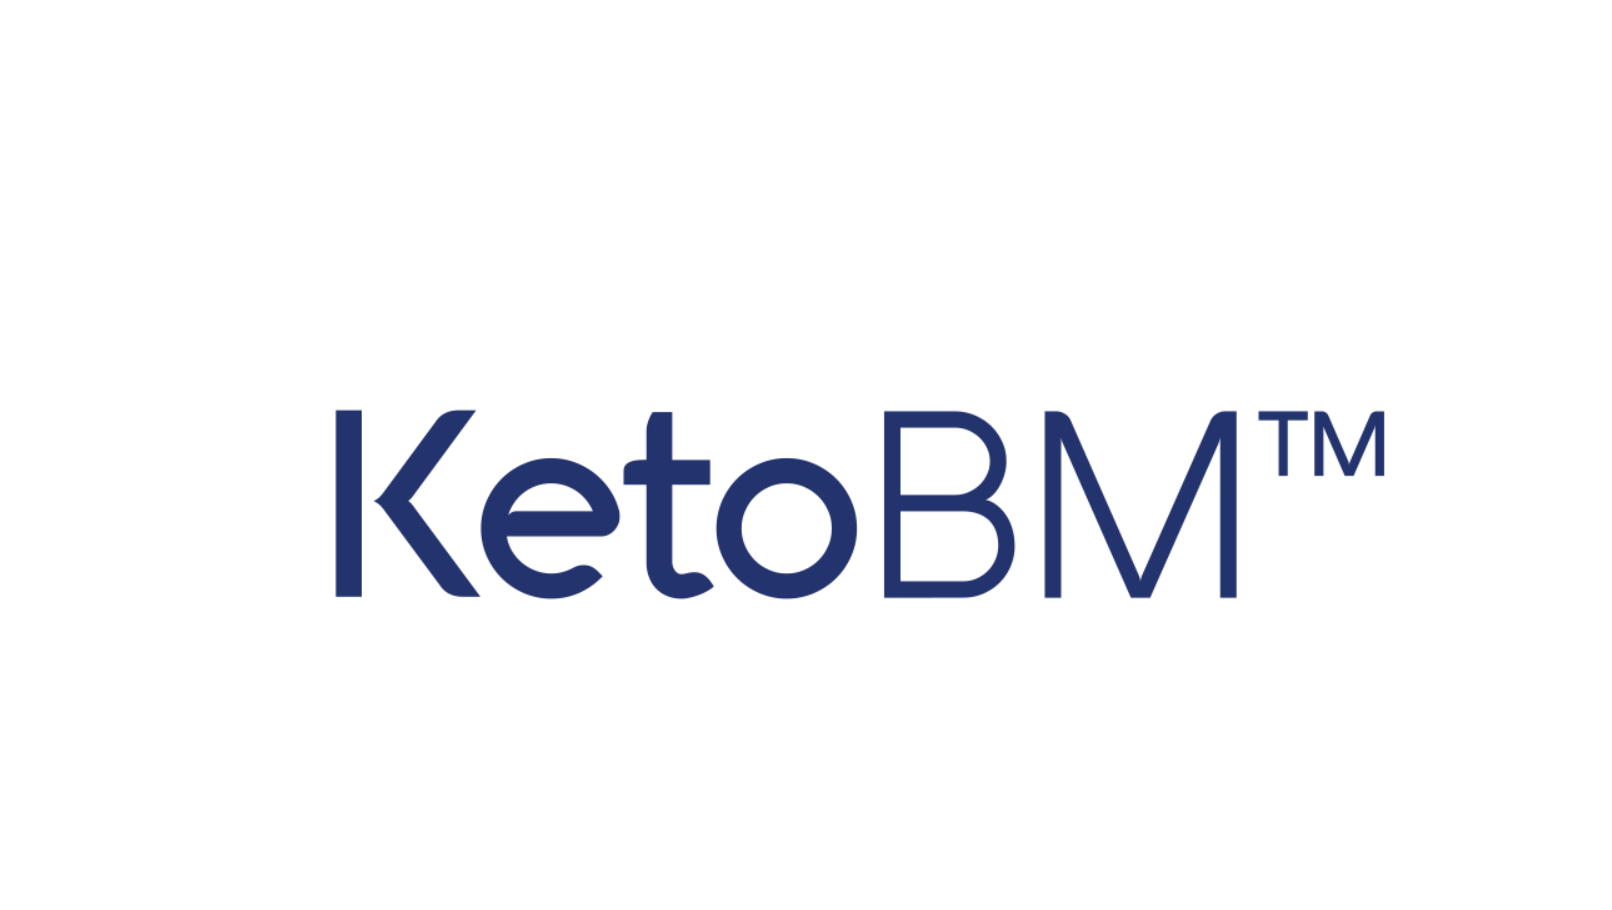 KetoBM Blood Ketone Meter Kit for Keto Diet Testing - Complete Ketone Test  Kit with Ketone Monitor, Keto Strips, Lancing Device & Lancets - Easy